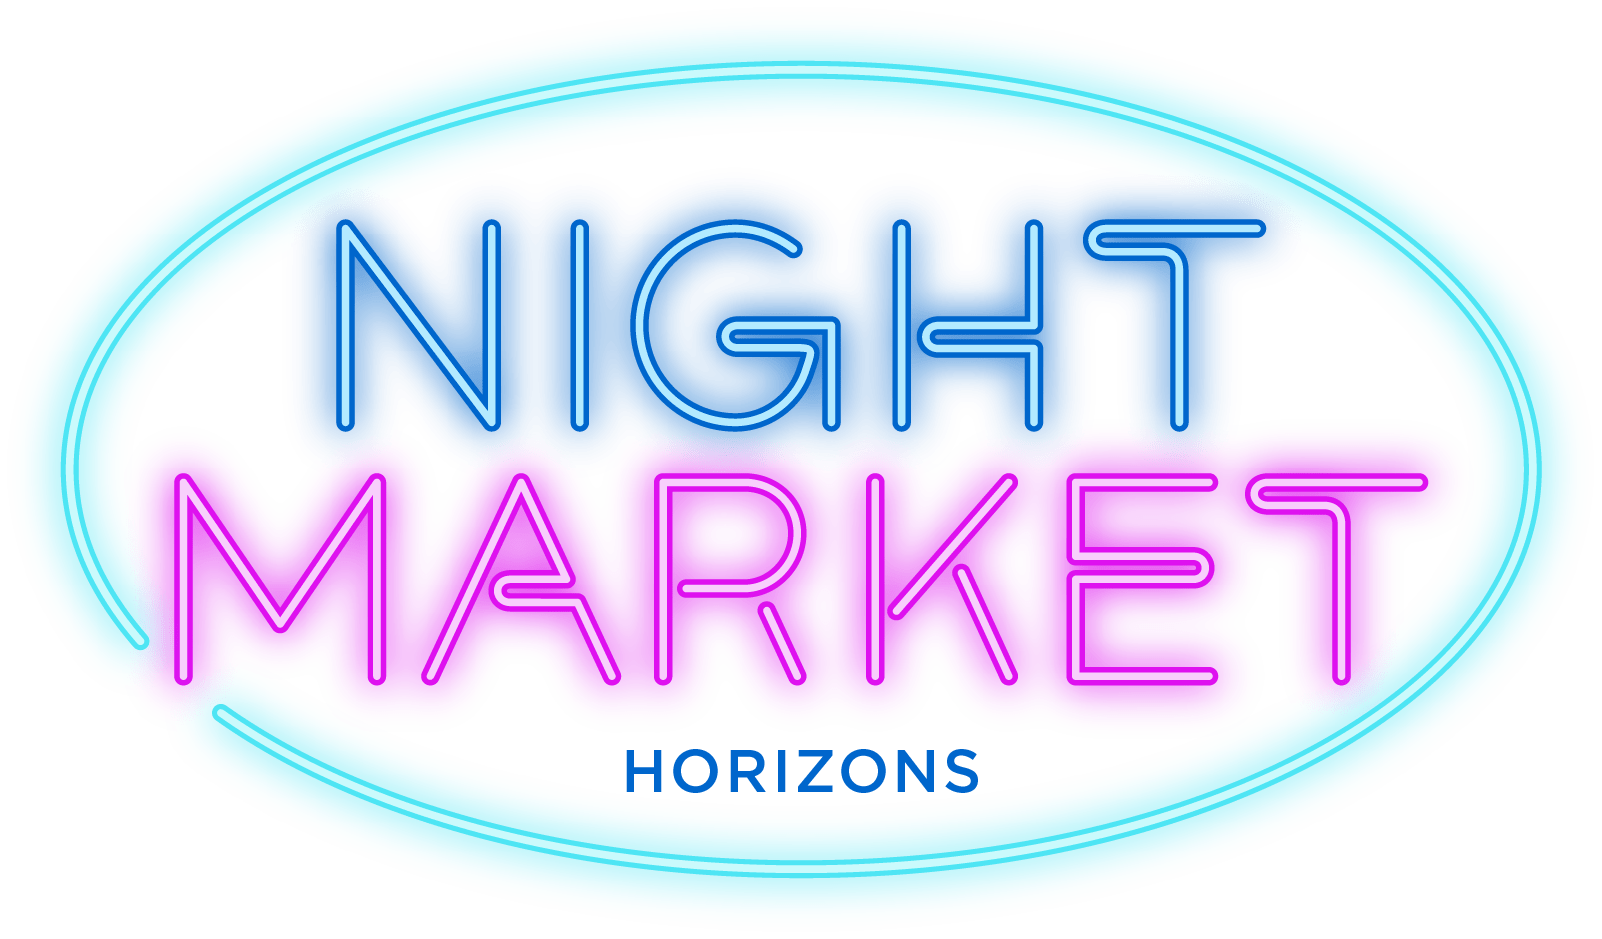 Night Market logo